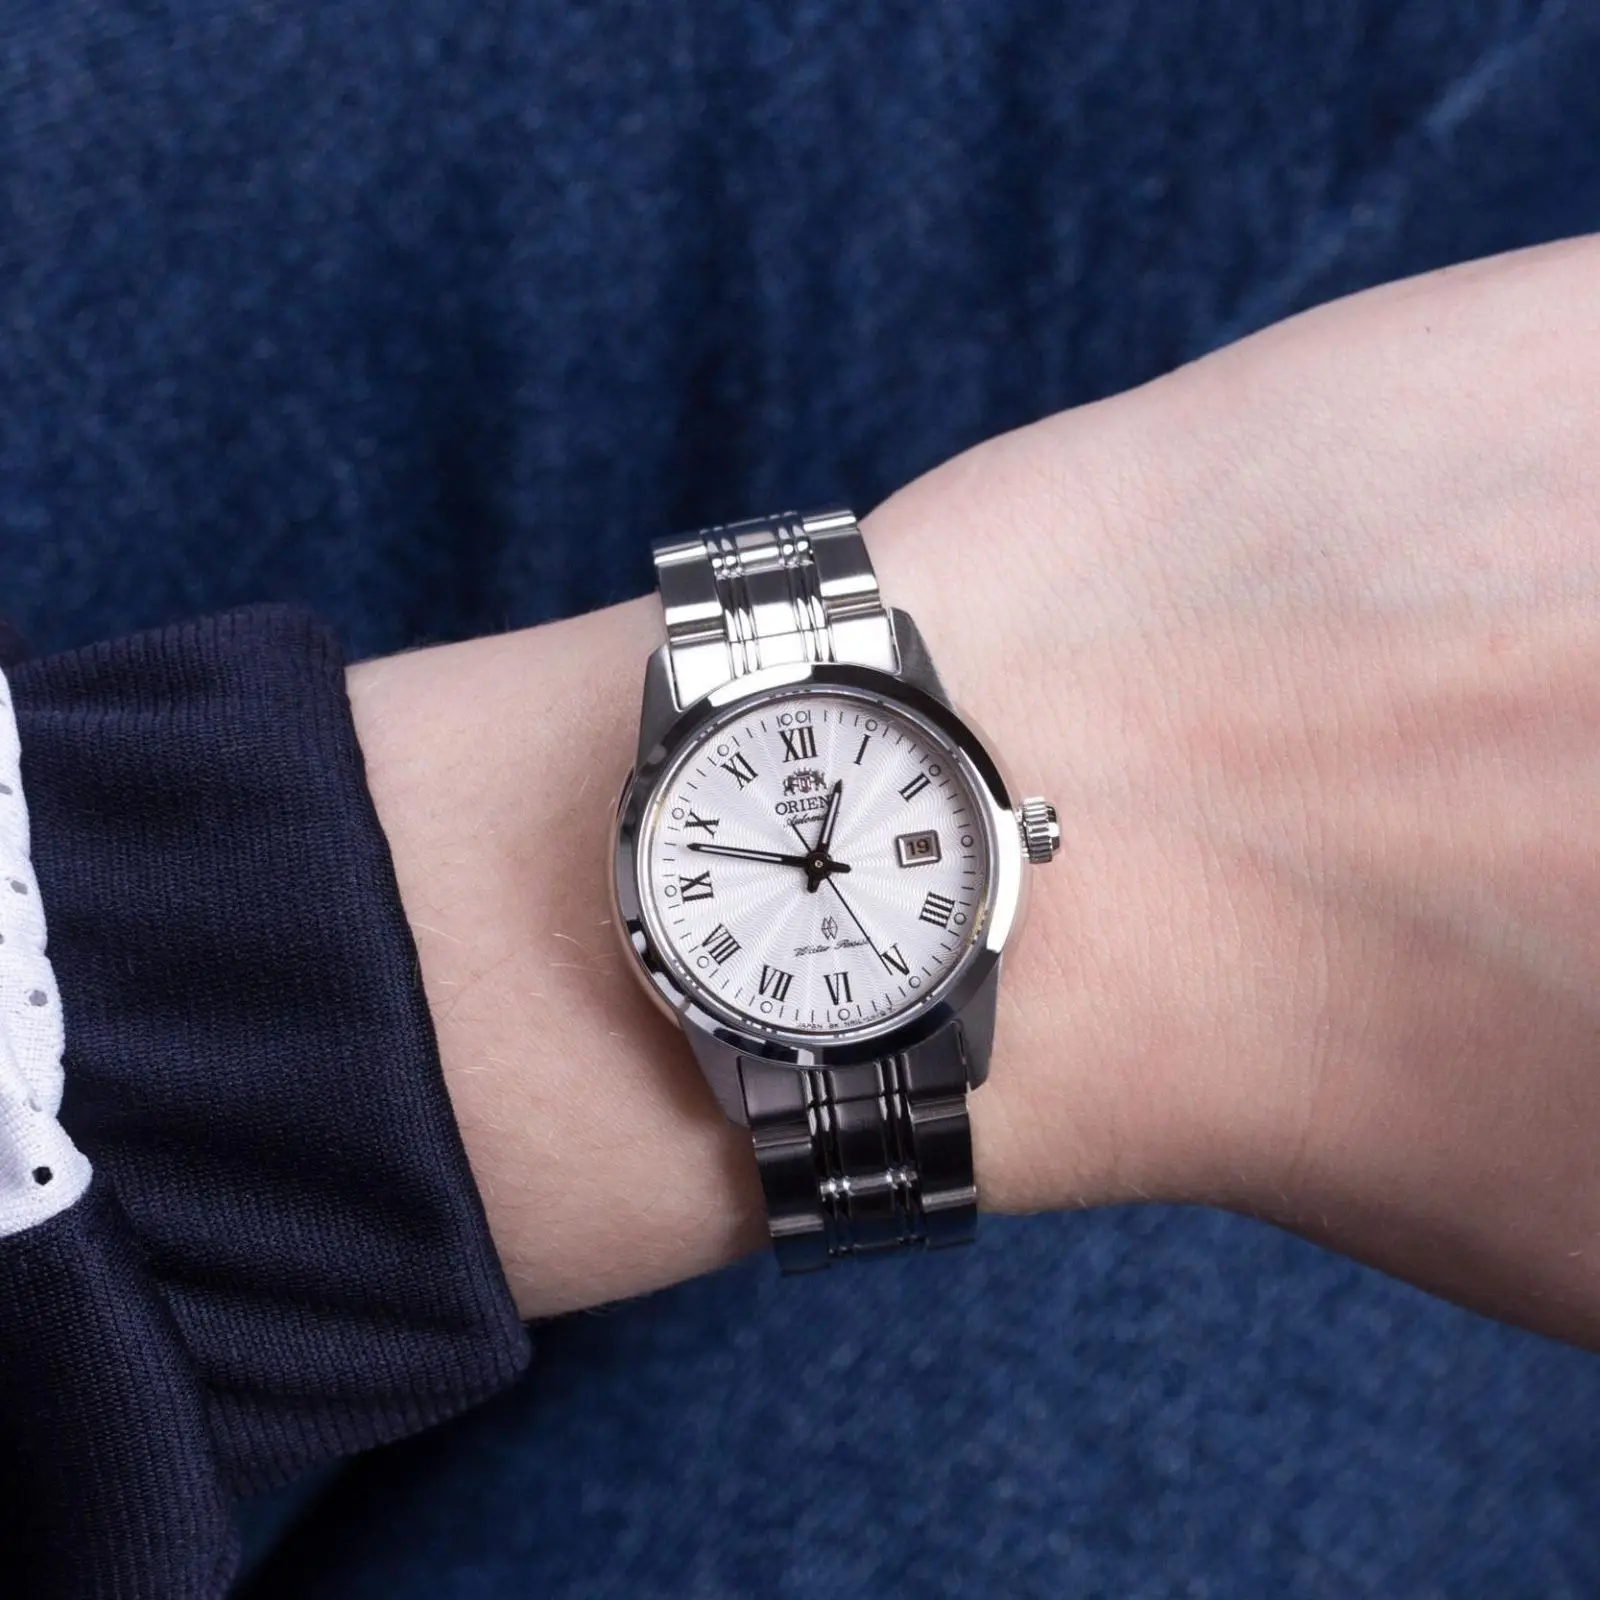 Original Orient Mechanical Woman Watch, Japanese Business Wrist Watch Crystal-Encrusted See-through Case Back LUXURI enlarge